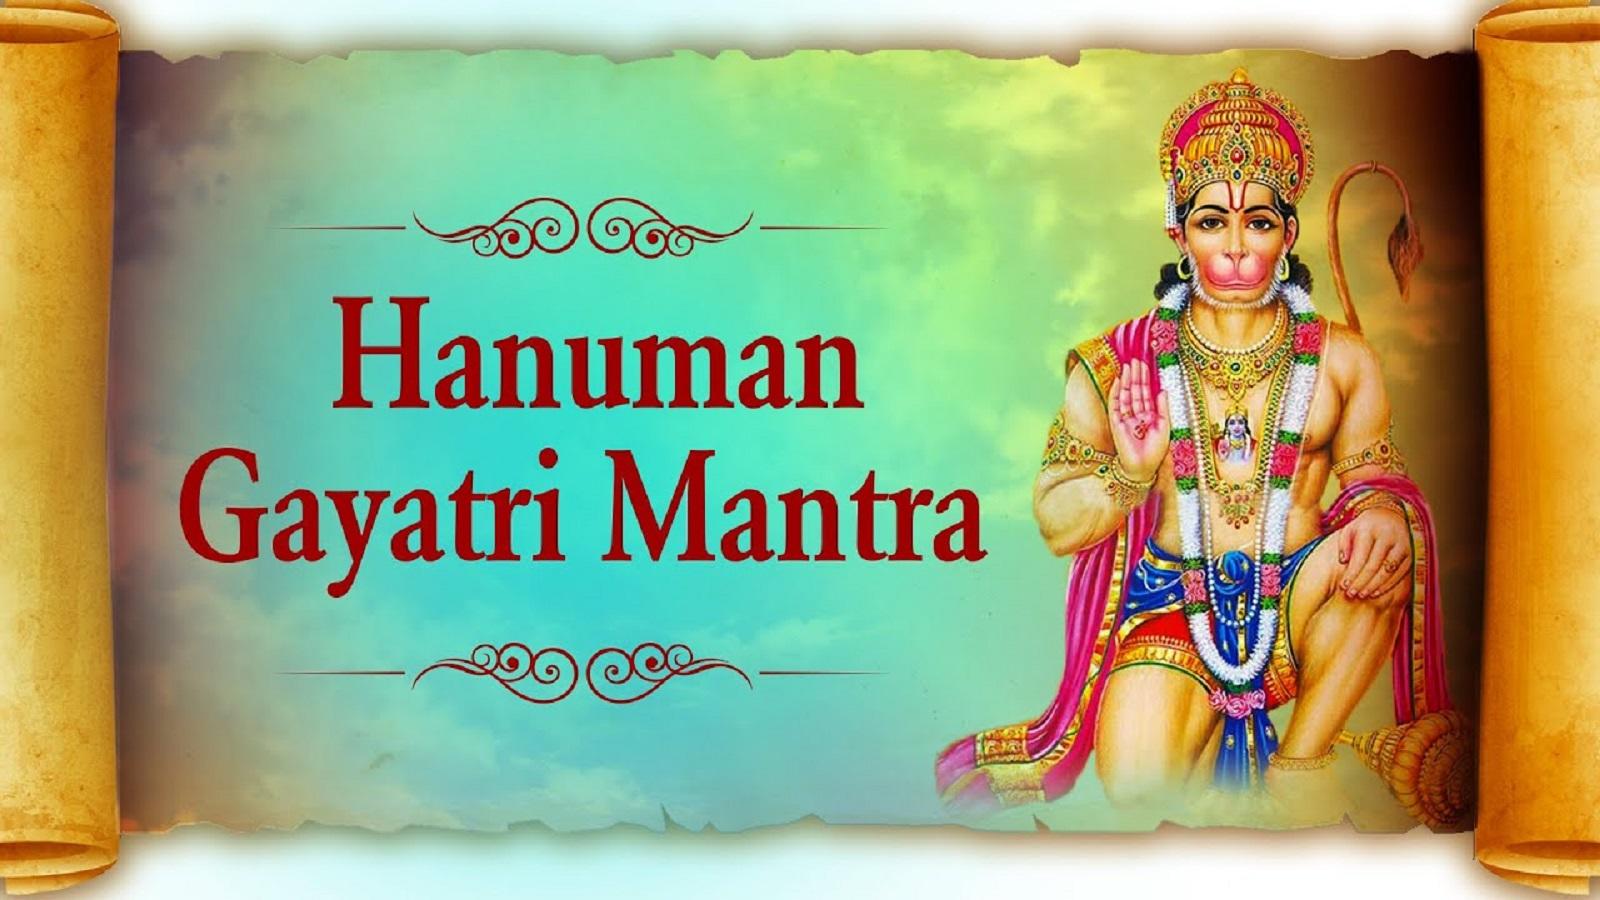 Hanuman Jayanti Special: Hanuman Gayatri Mantra with Lyrics ...